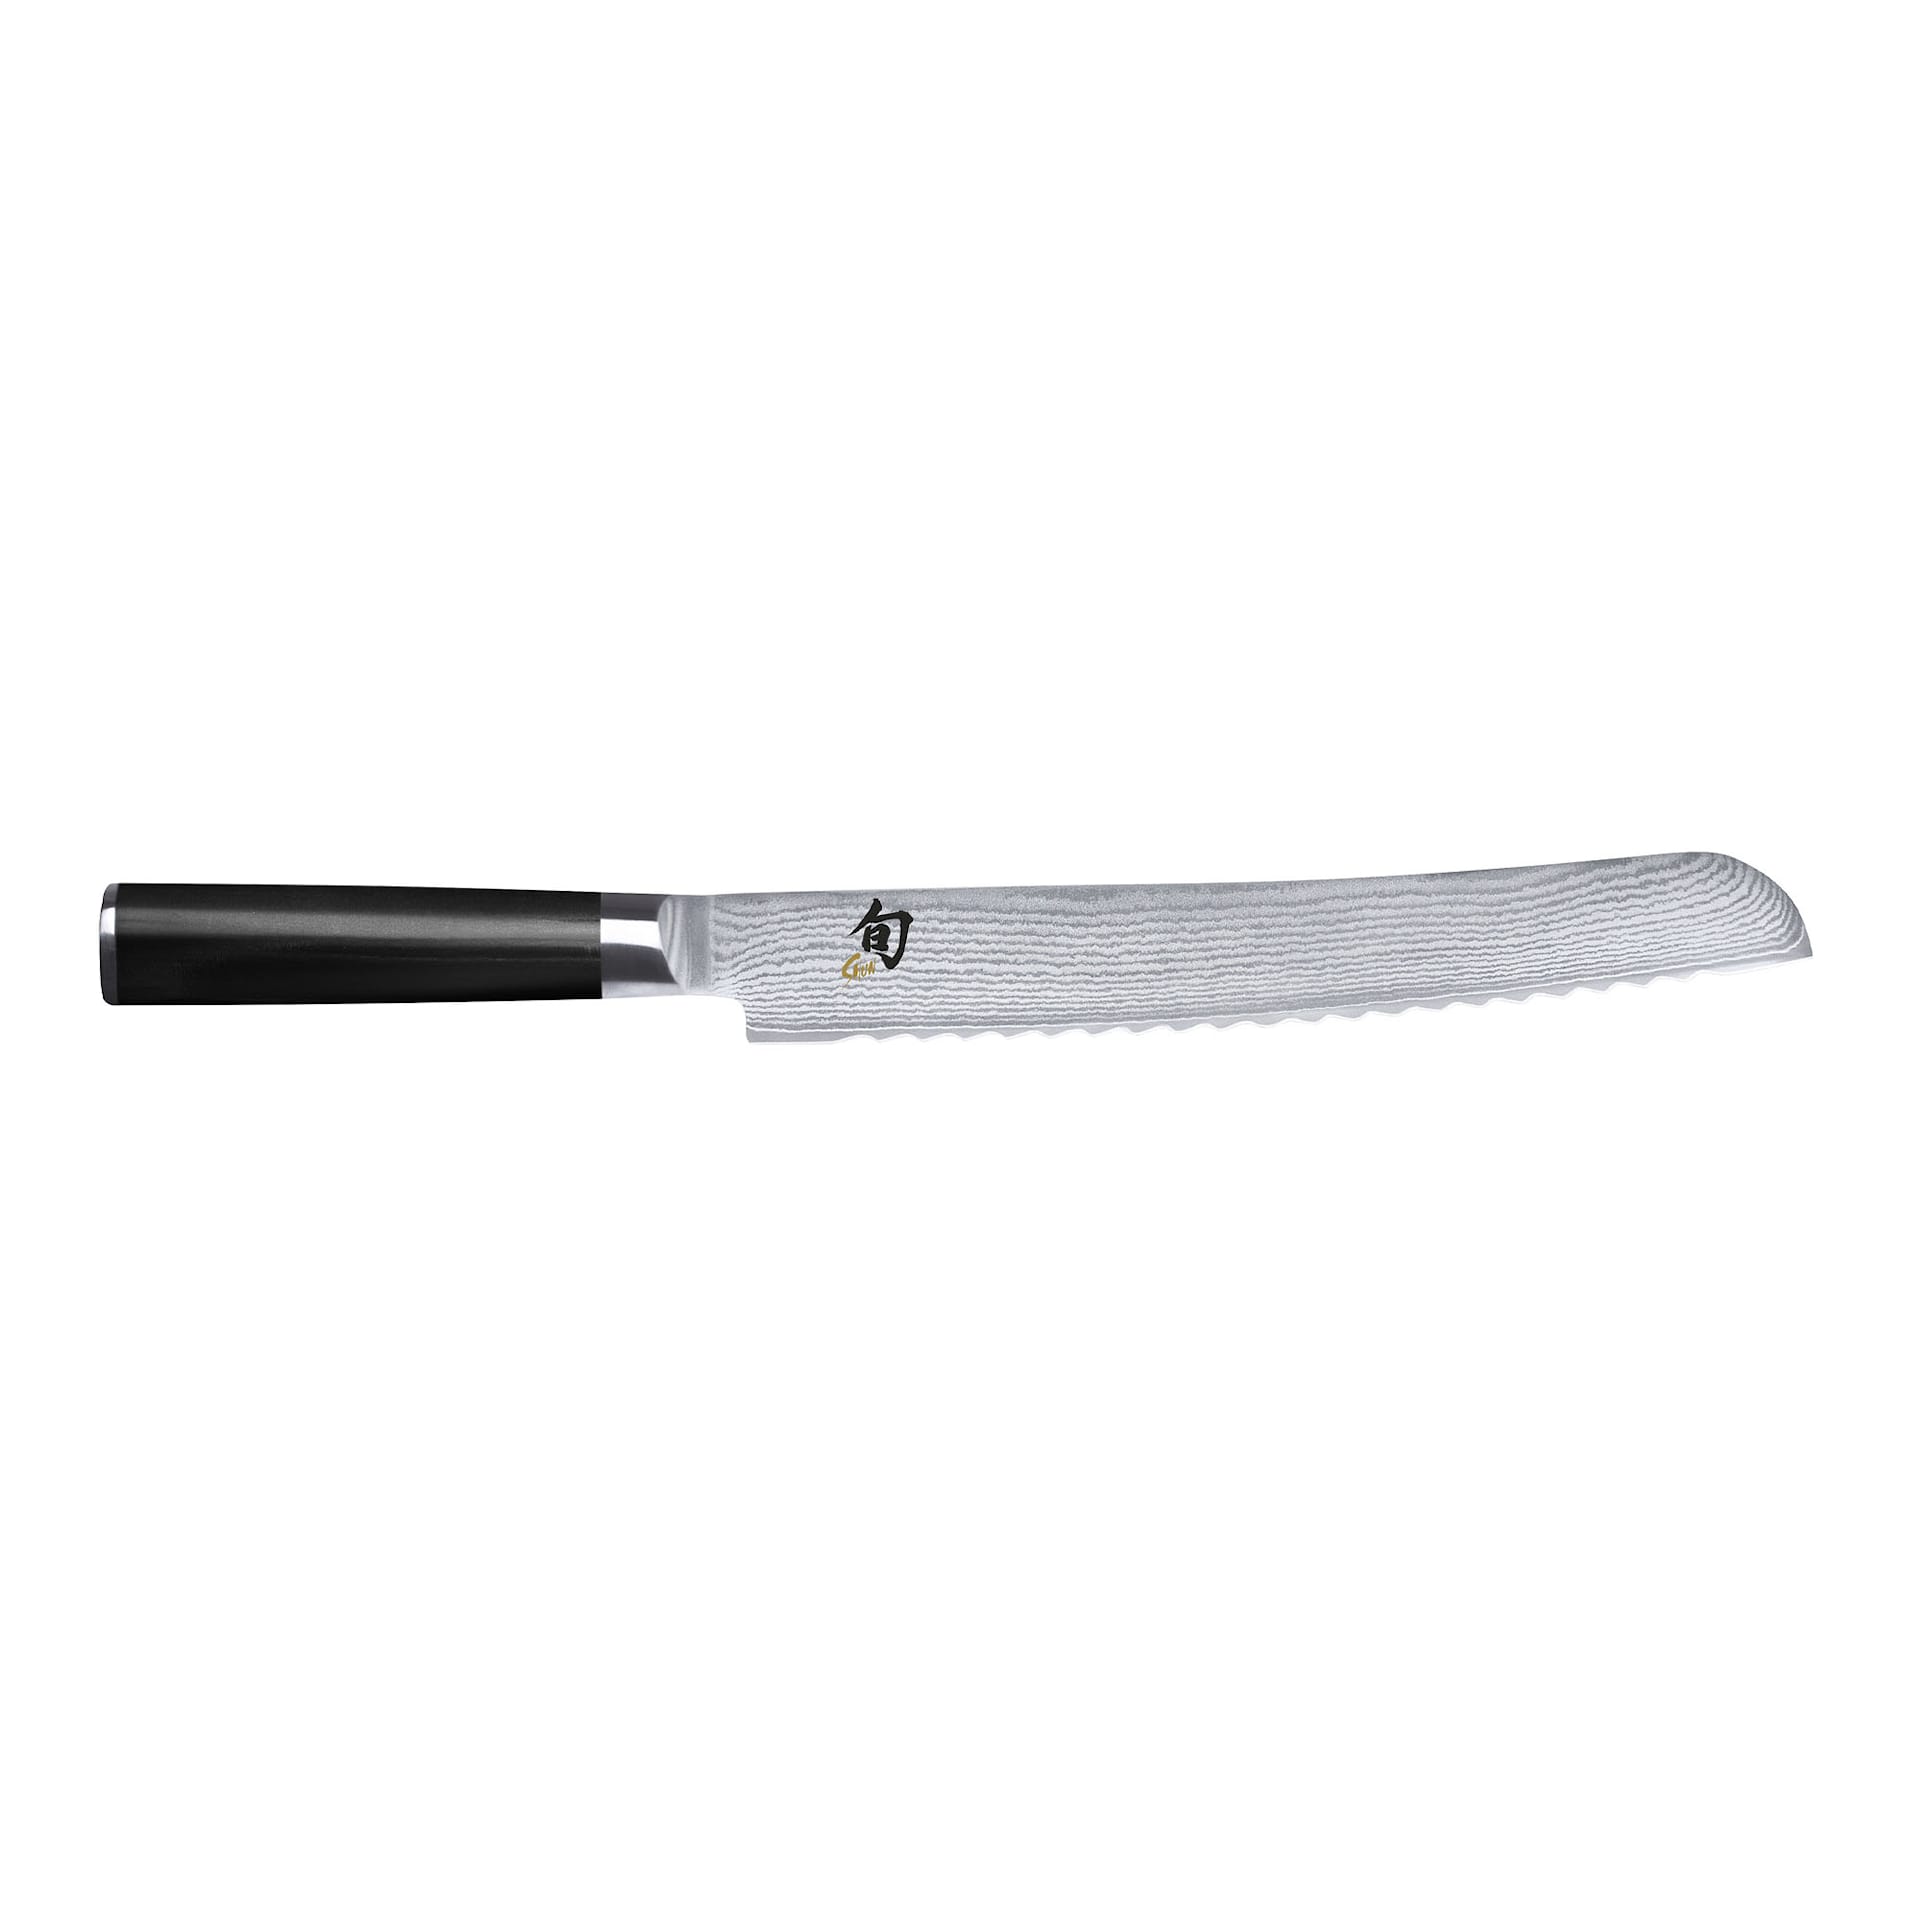 SHUN CLASSIC Bread knife 23 cm, Black handle - KAI - NO GA